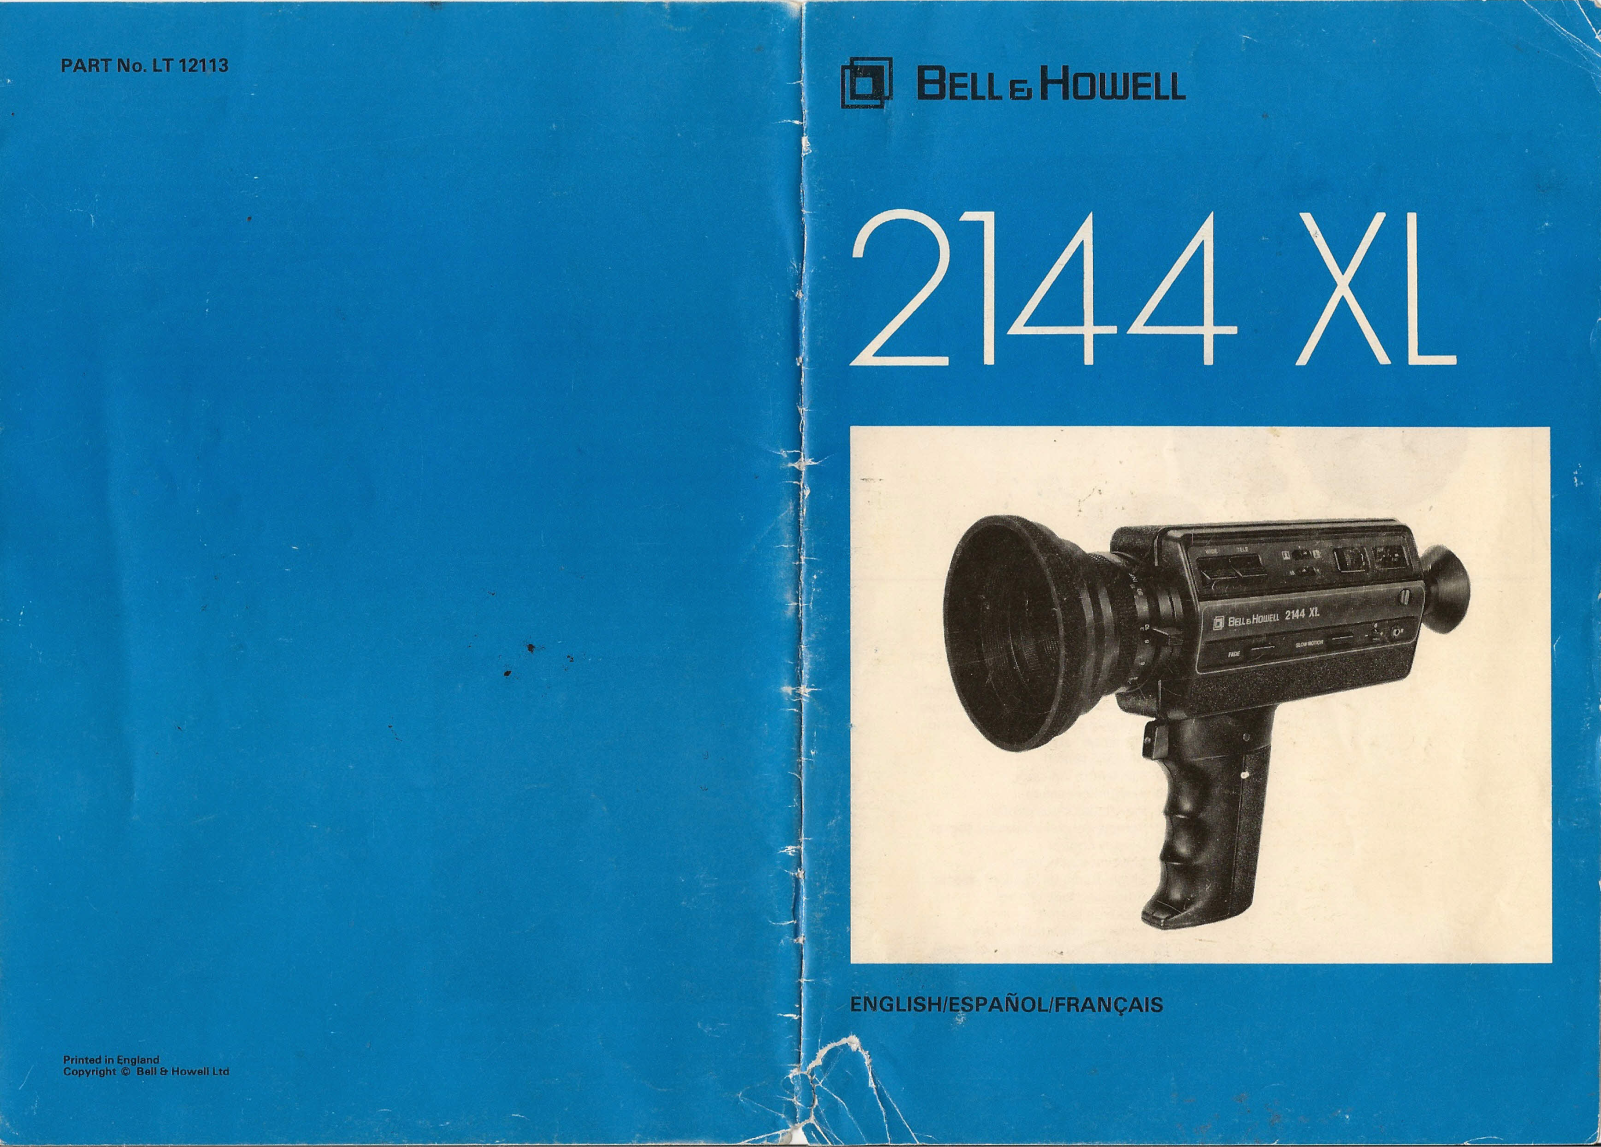 Bell & howell 2144 XL User Manual